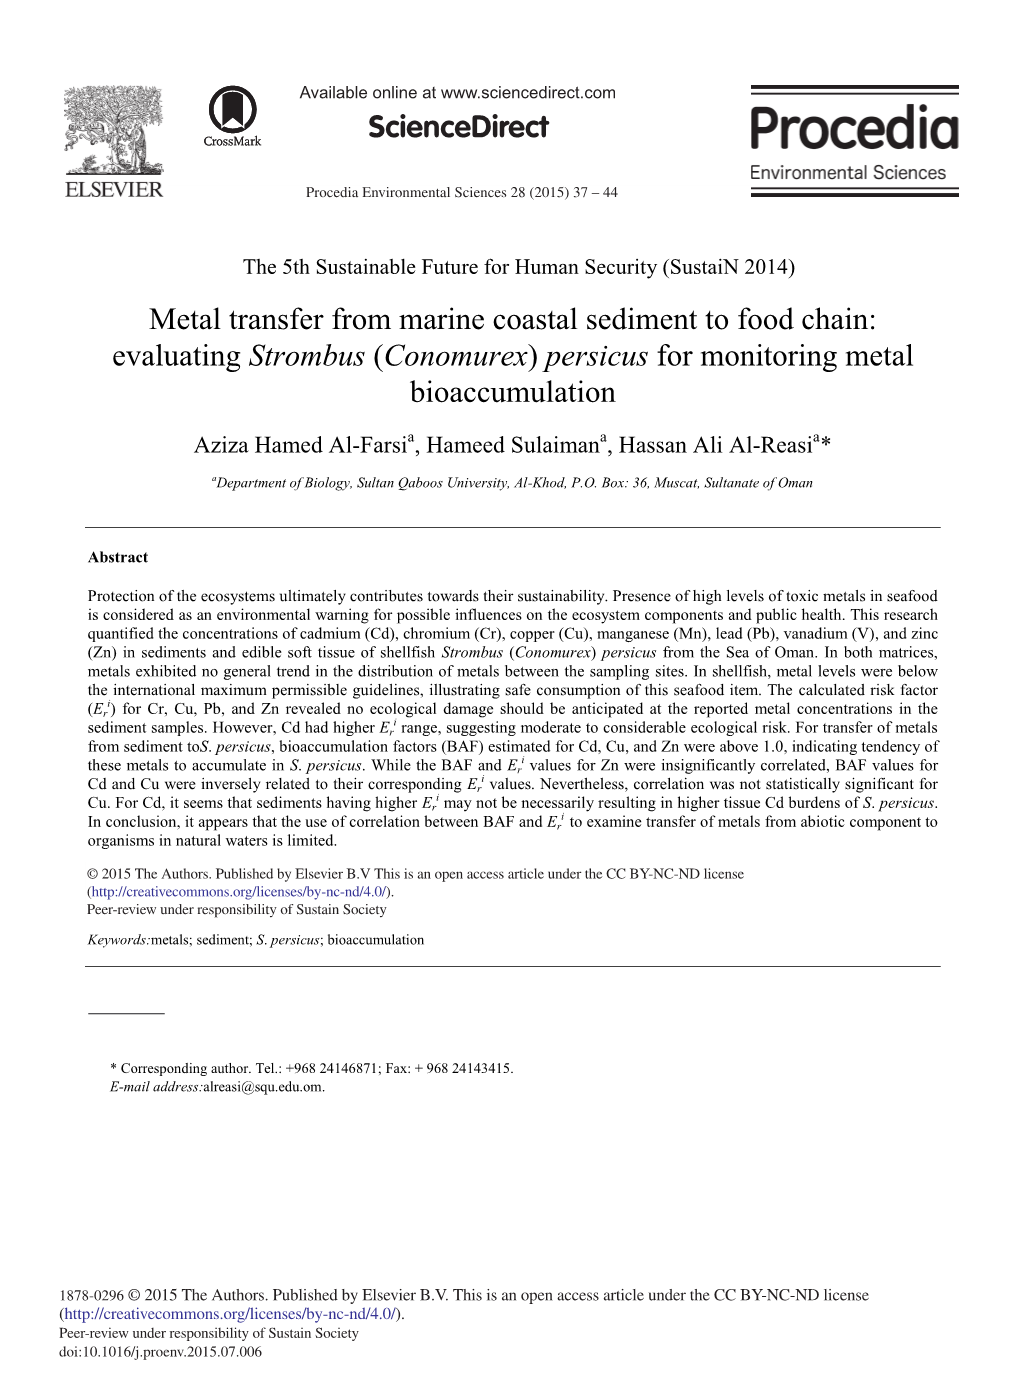 Metal Transfer from Marine Coastal Sediment to Food Chain: Evaluating Strombus (Conomurex) Persicus for Monitoring Metal Bioaccumulation